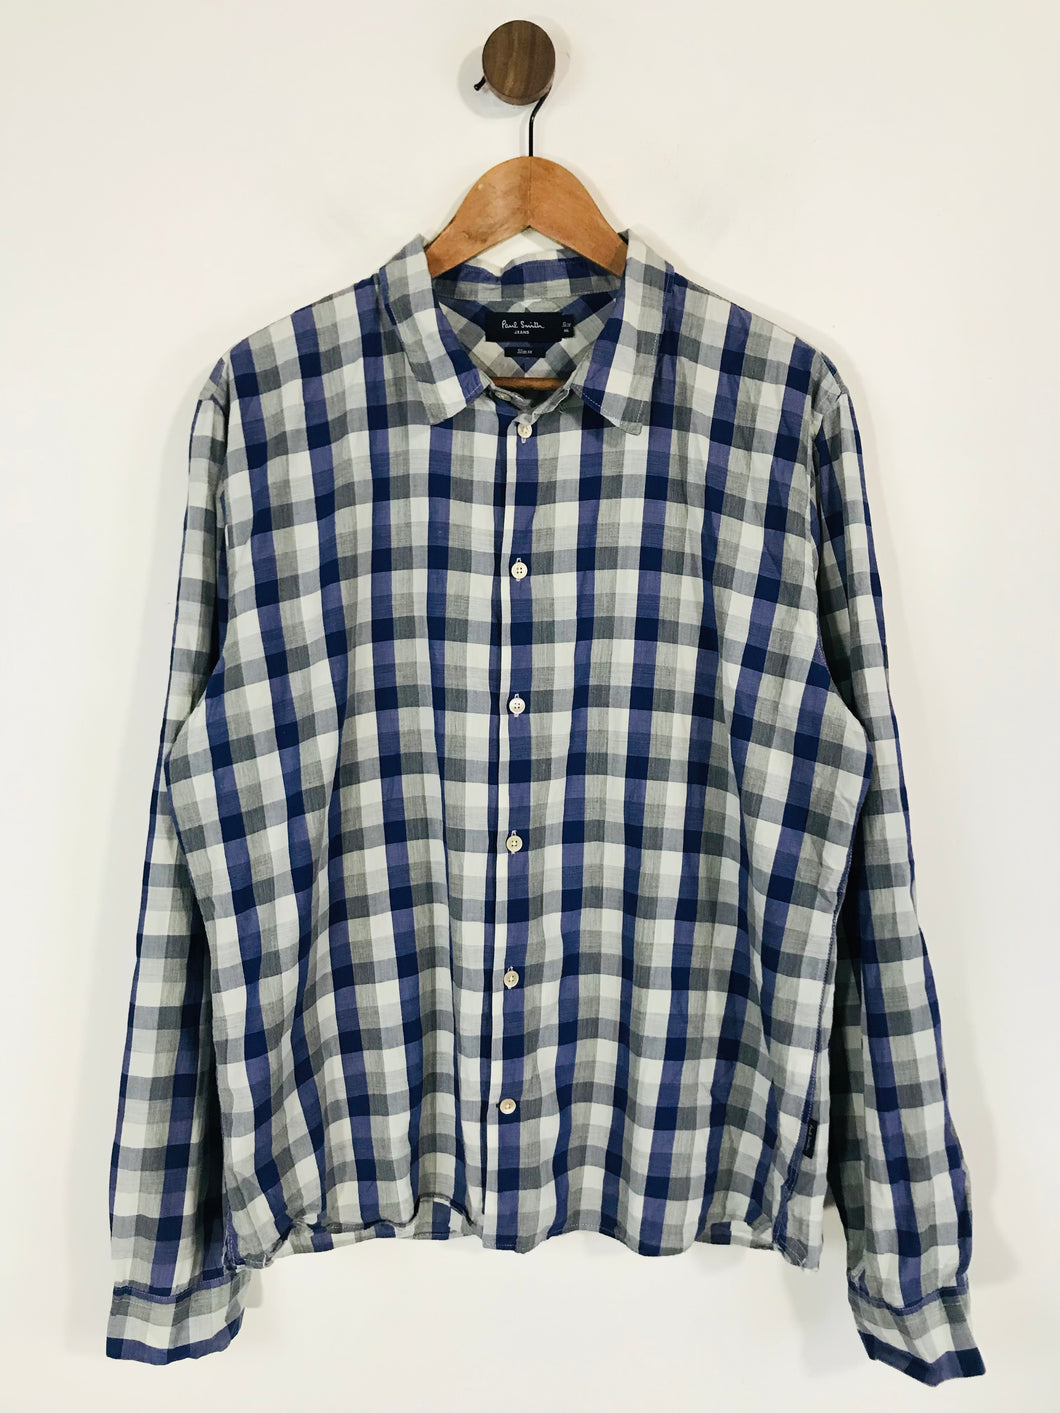 Paul Smith Men's Cotton Check Gingham Button-Up Shirt | XXL UK18-20 | Multicoloured